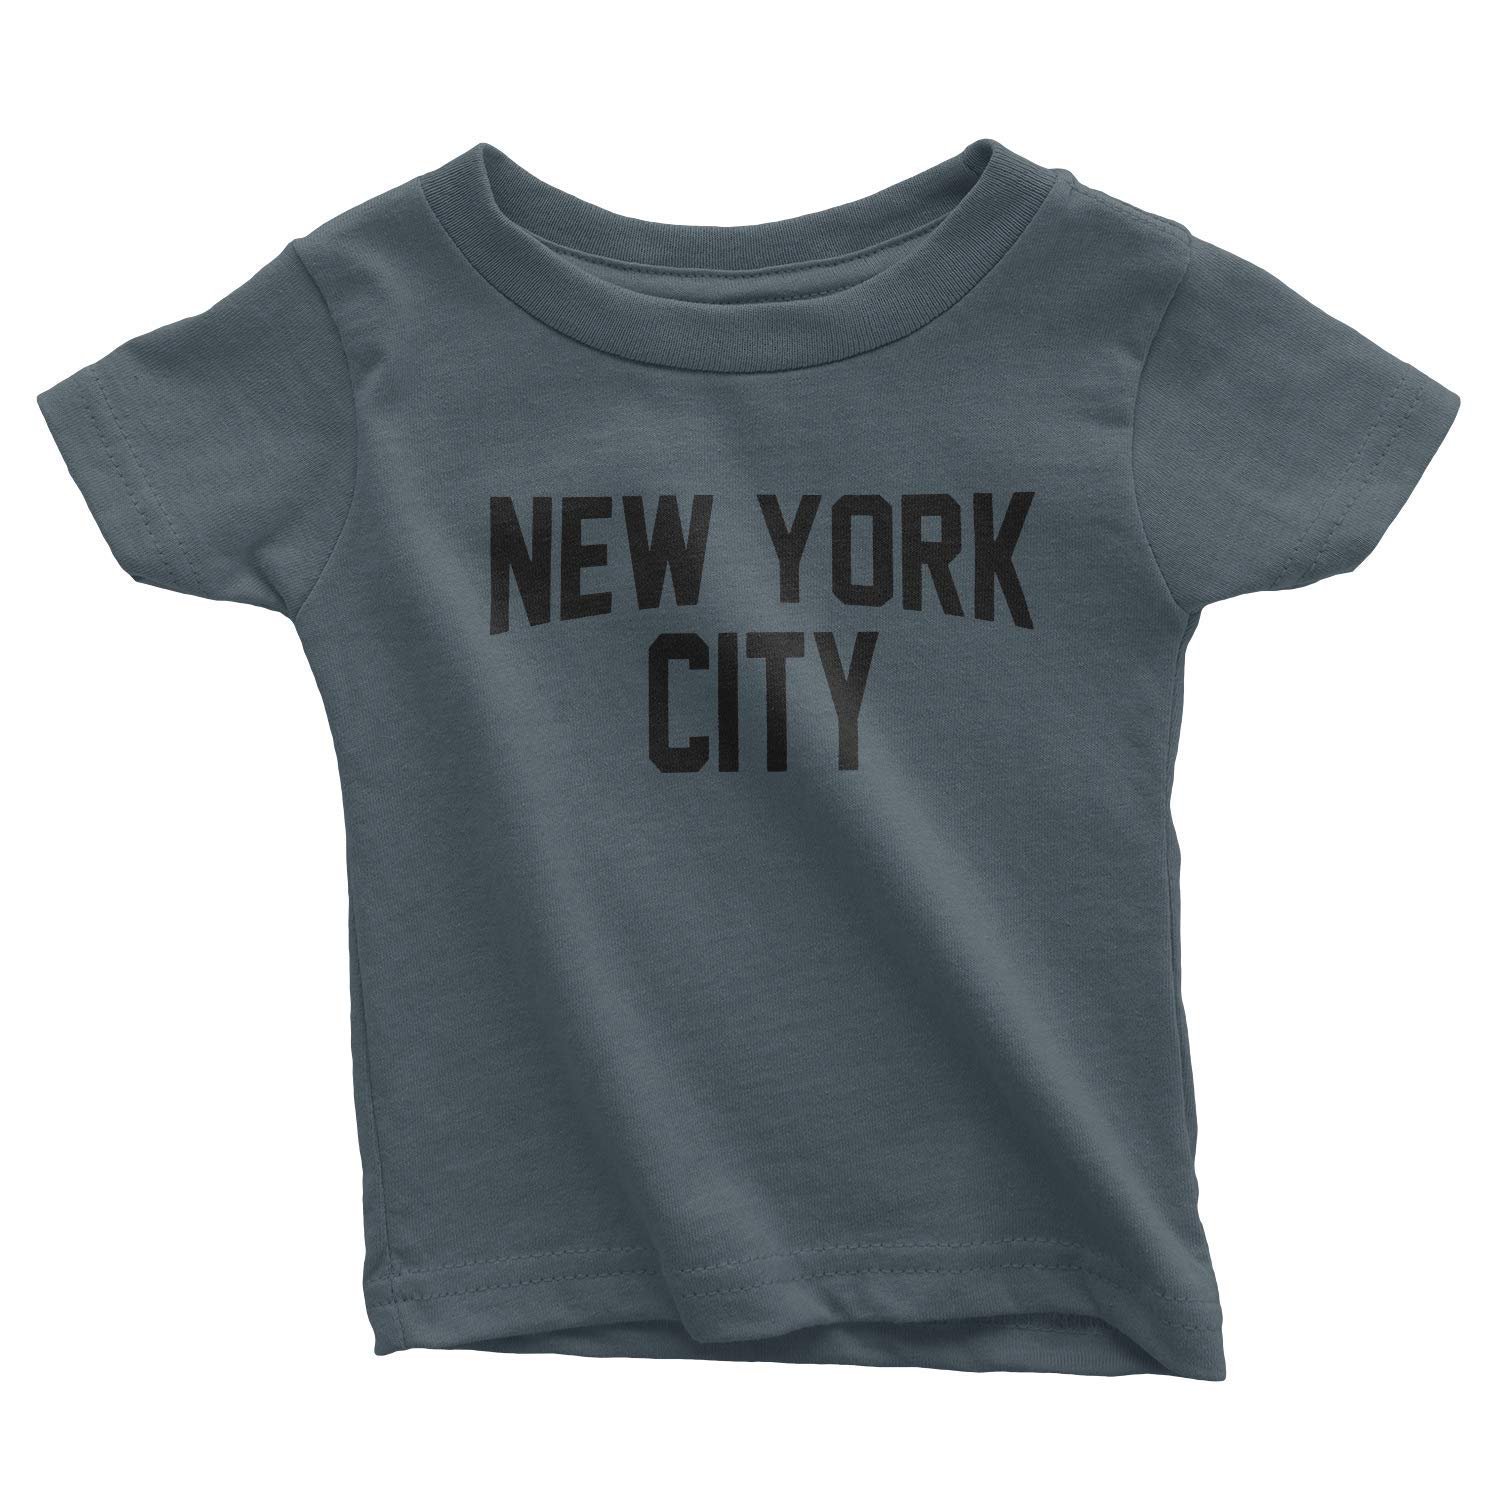 New York City Factory New York City Baby Body Ringer shirt écran Imprimé lennon... 